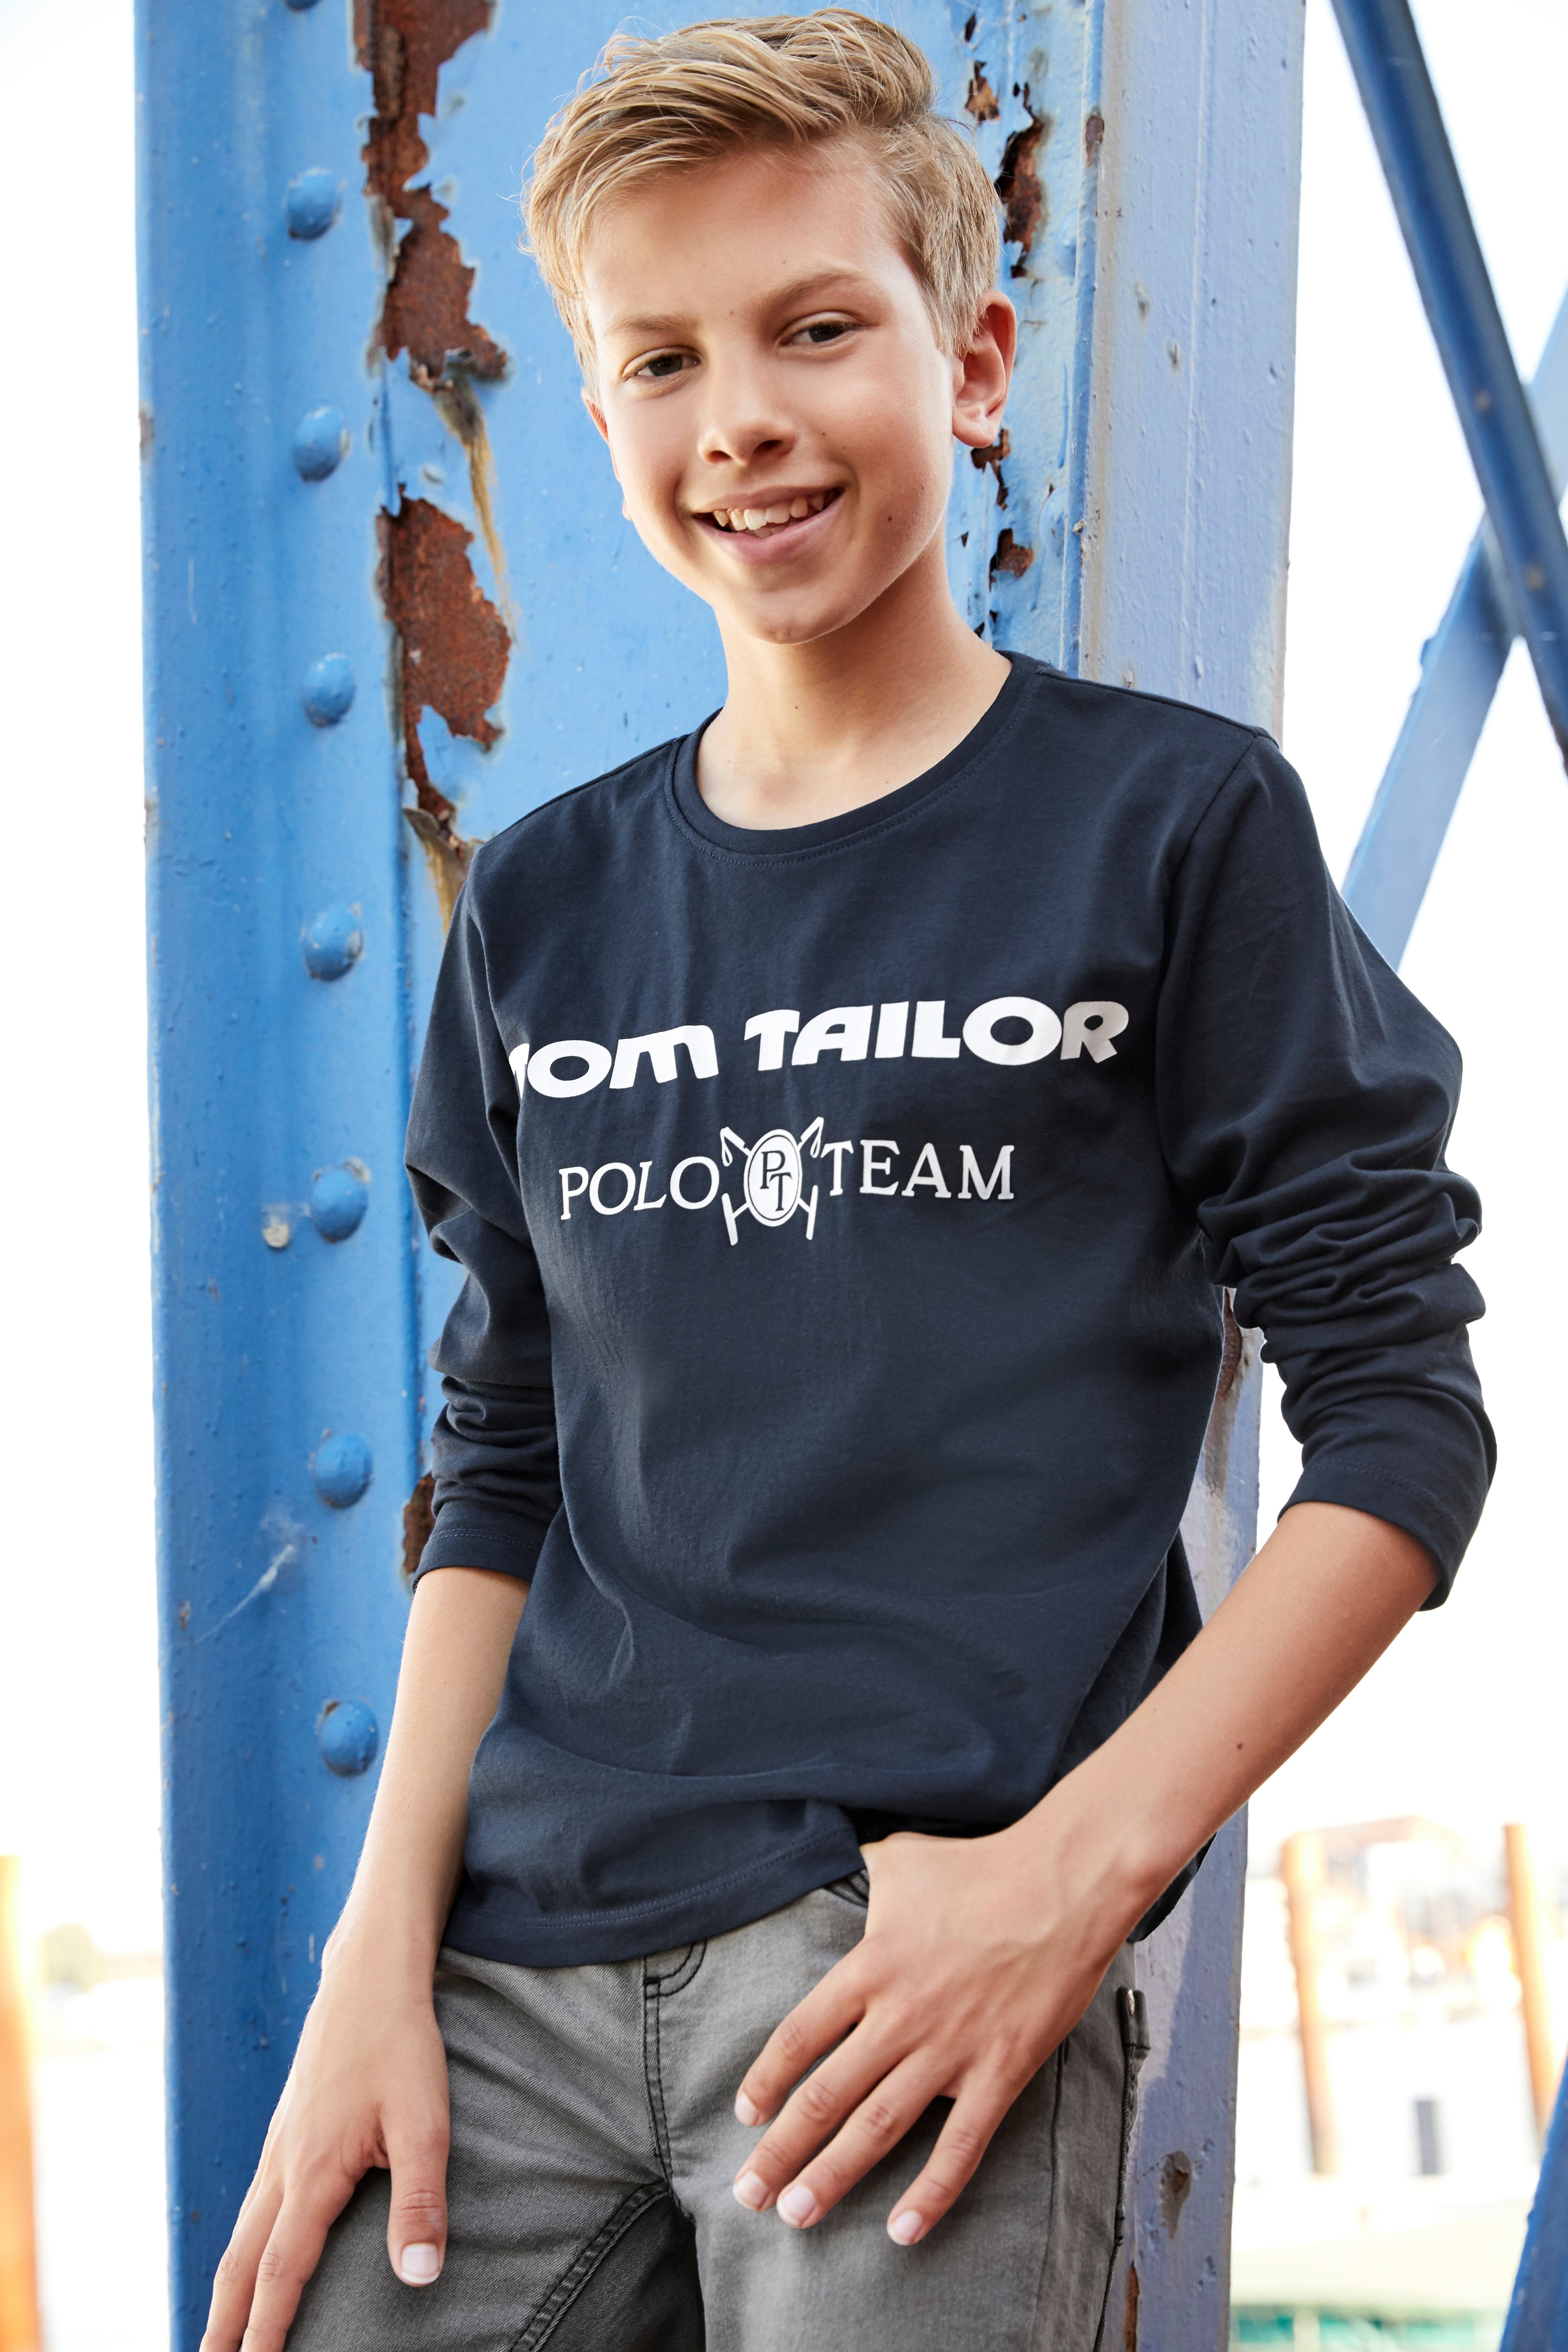 Kinder Teens (Gr. 128 - 182) TOM TAILOR Polo Team Langarmshirt